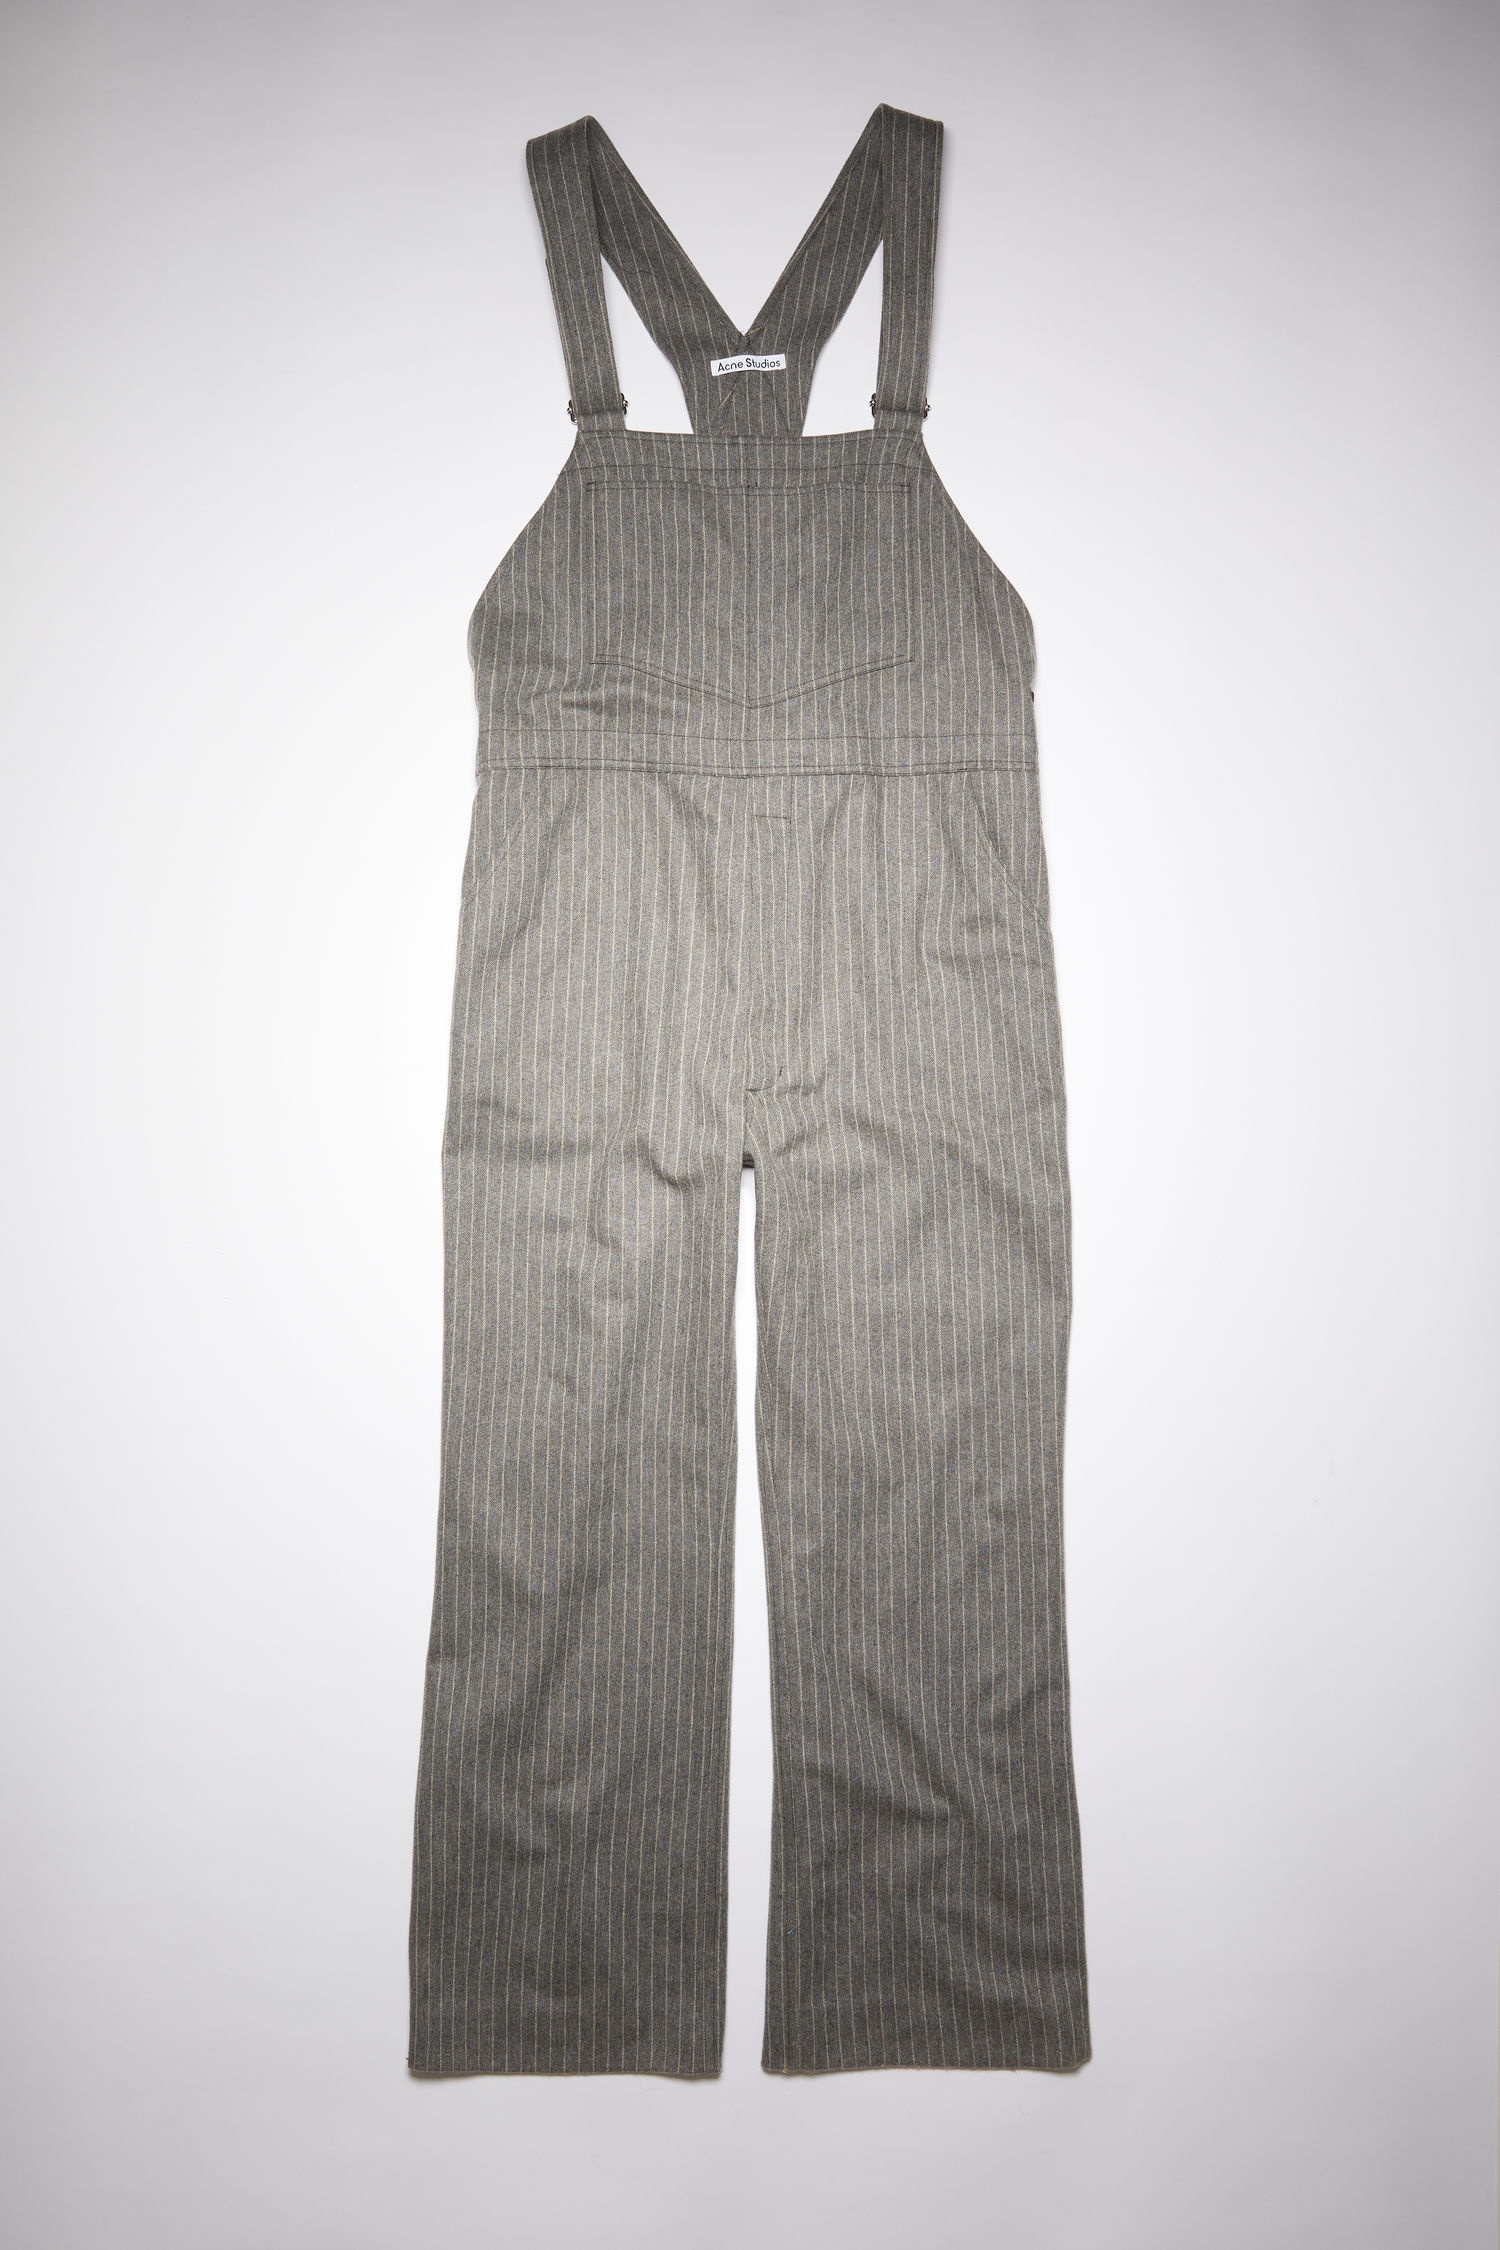 Acne Studios Striped overalls - Grey/beige | REVERSIBLE